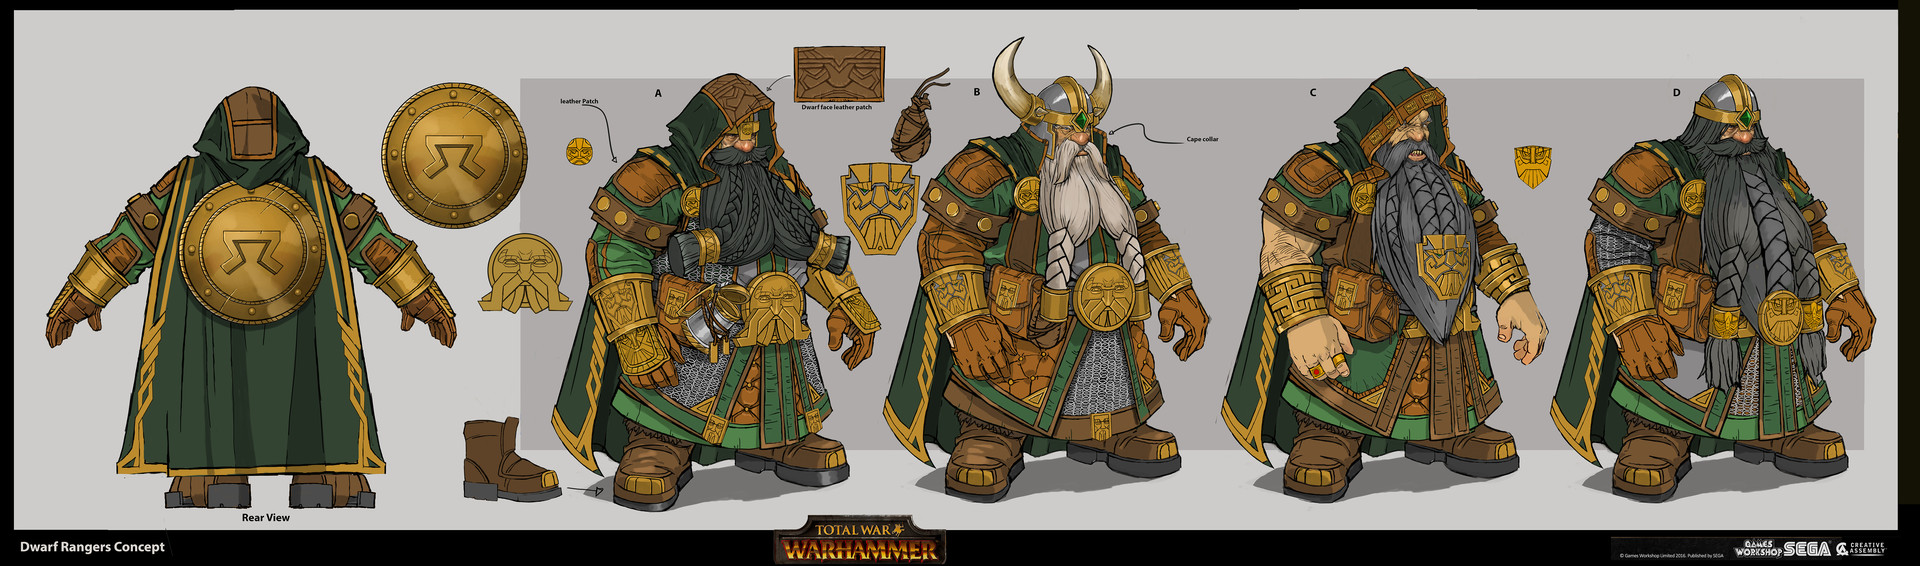 warhammer total war dwarves